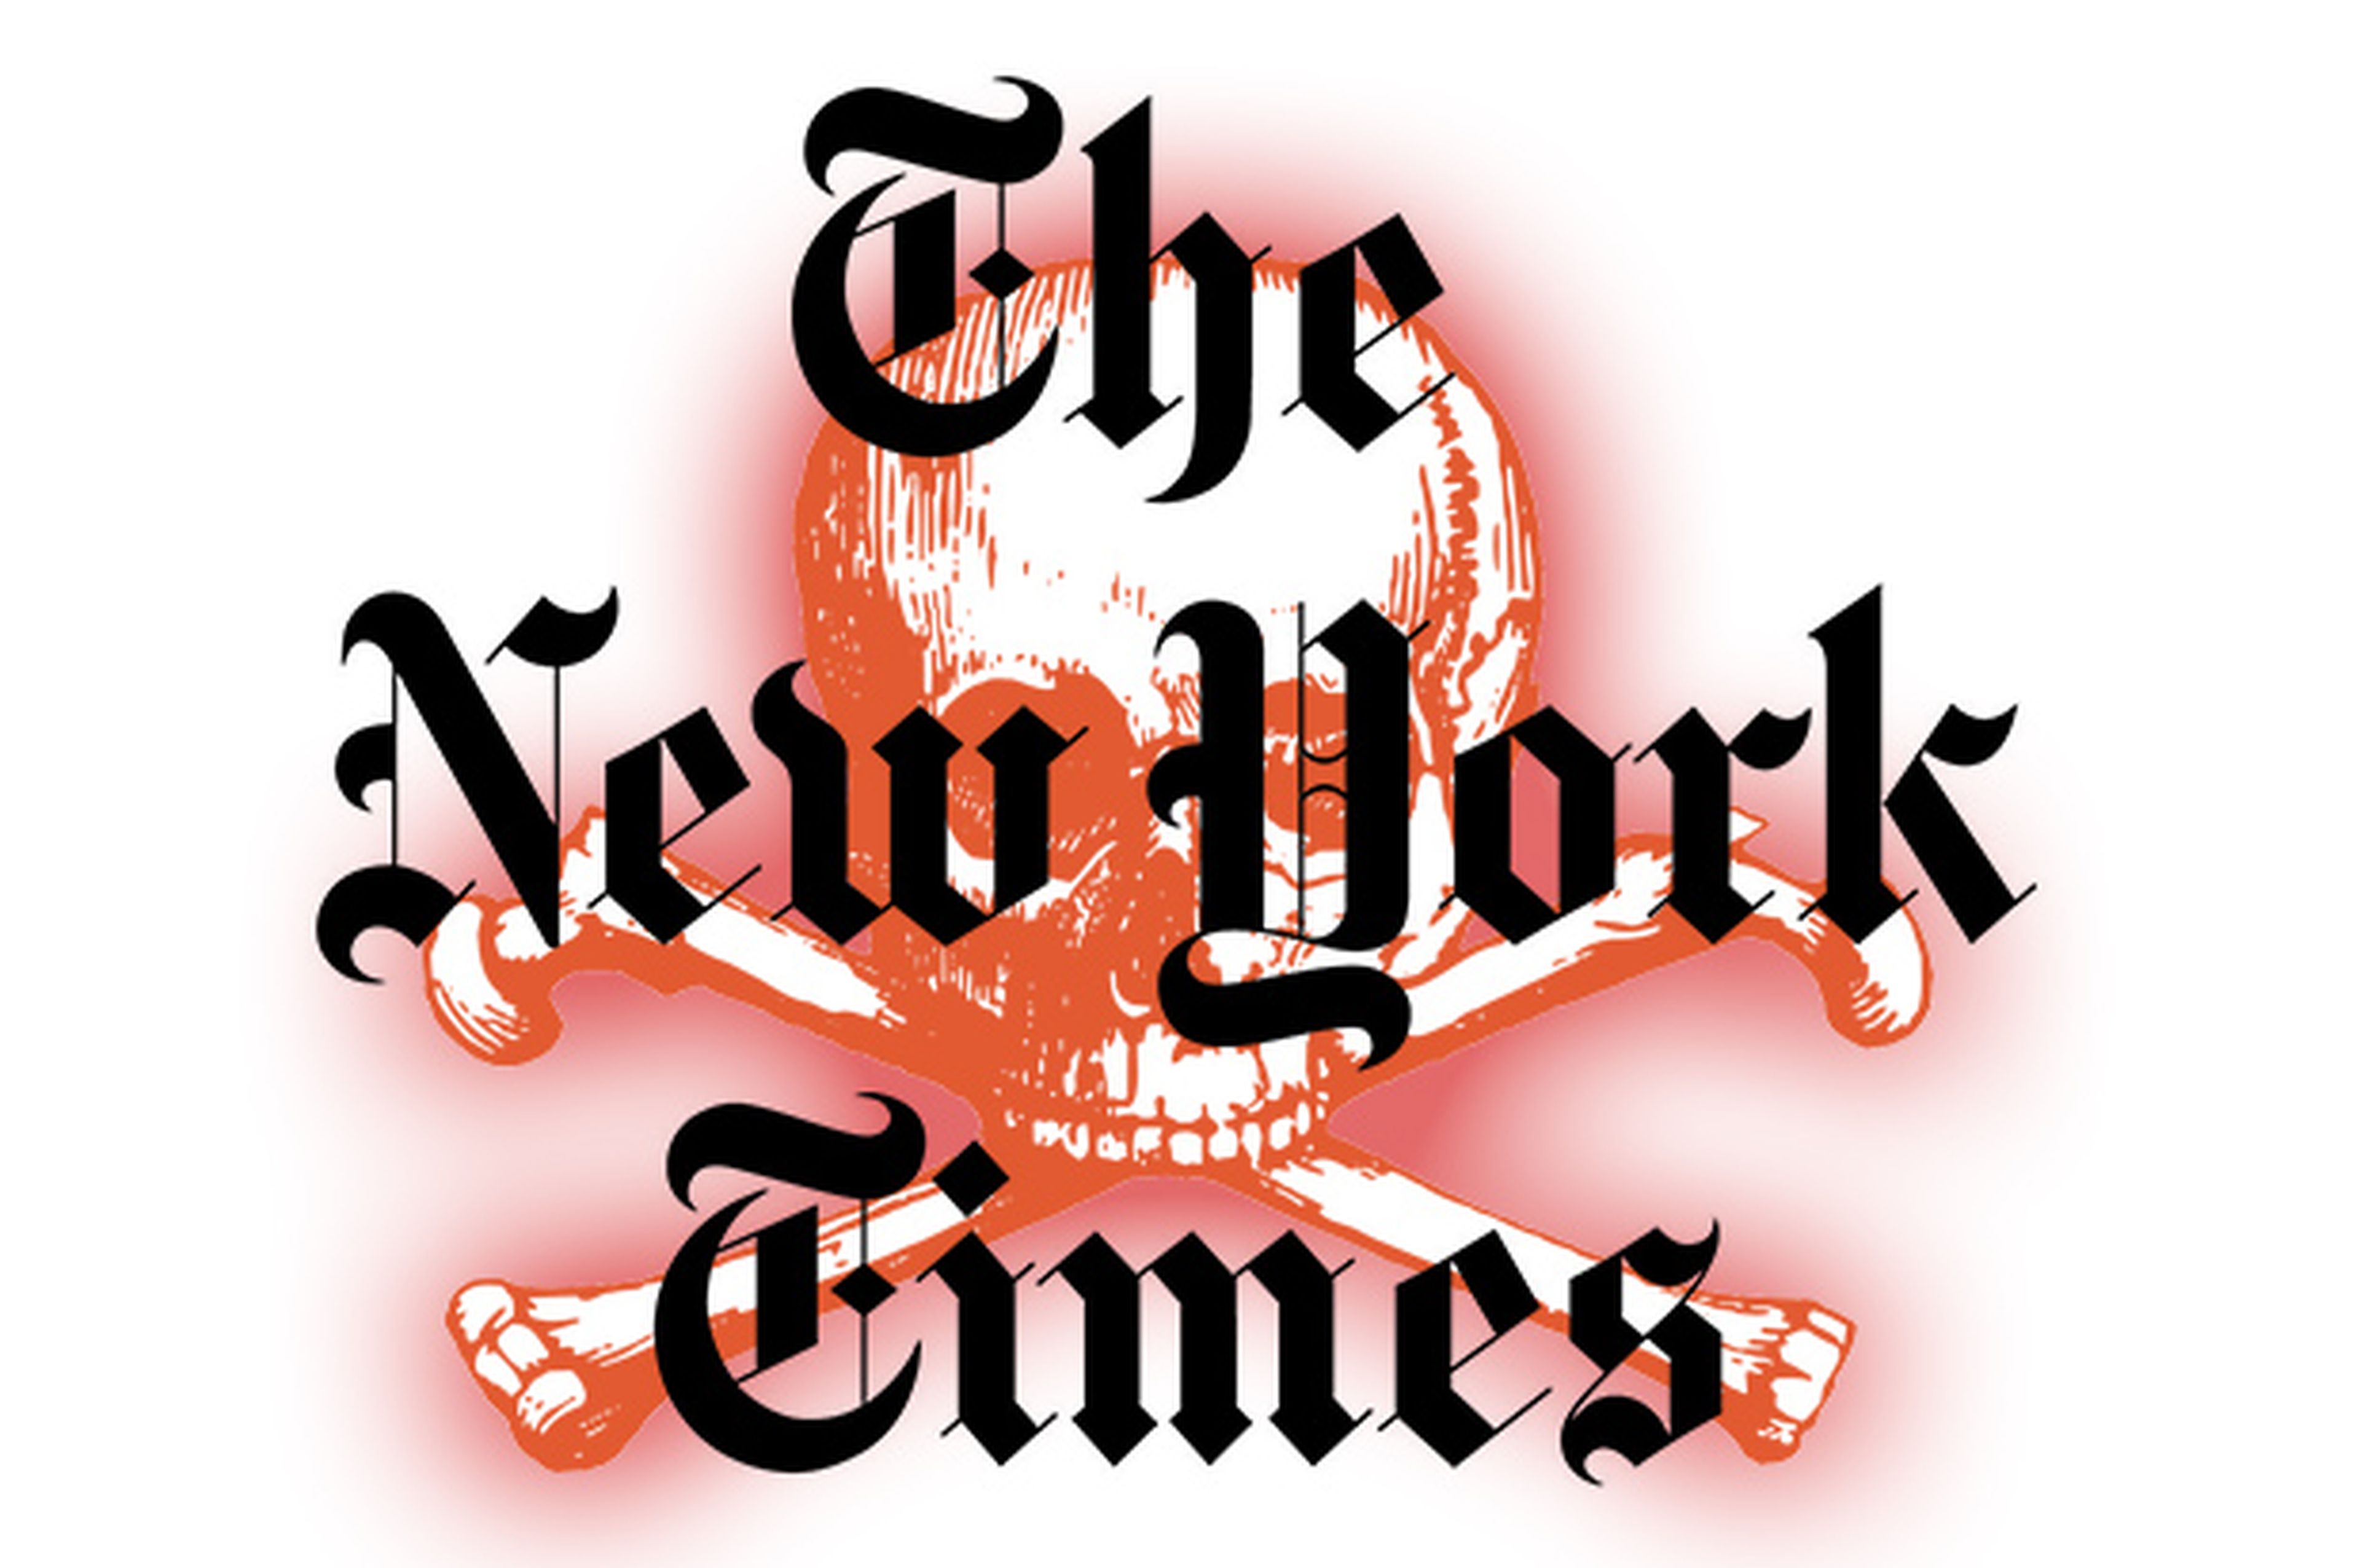 El sitio del New York Times, víctima de un ciberataque